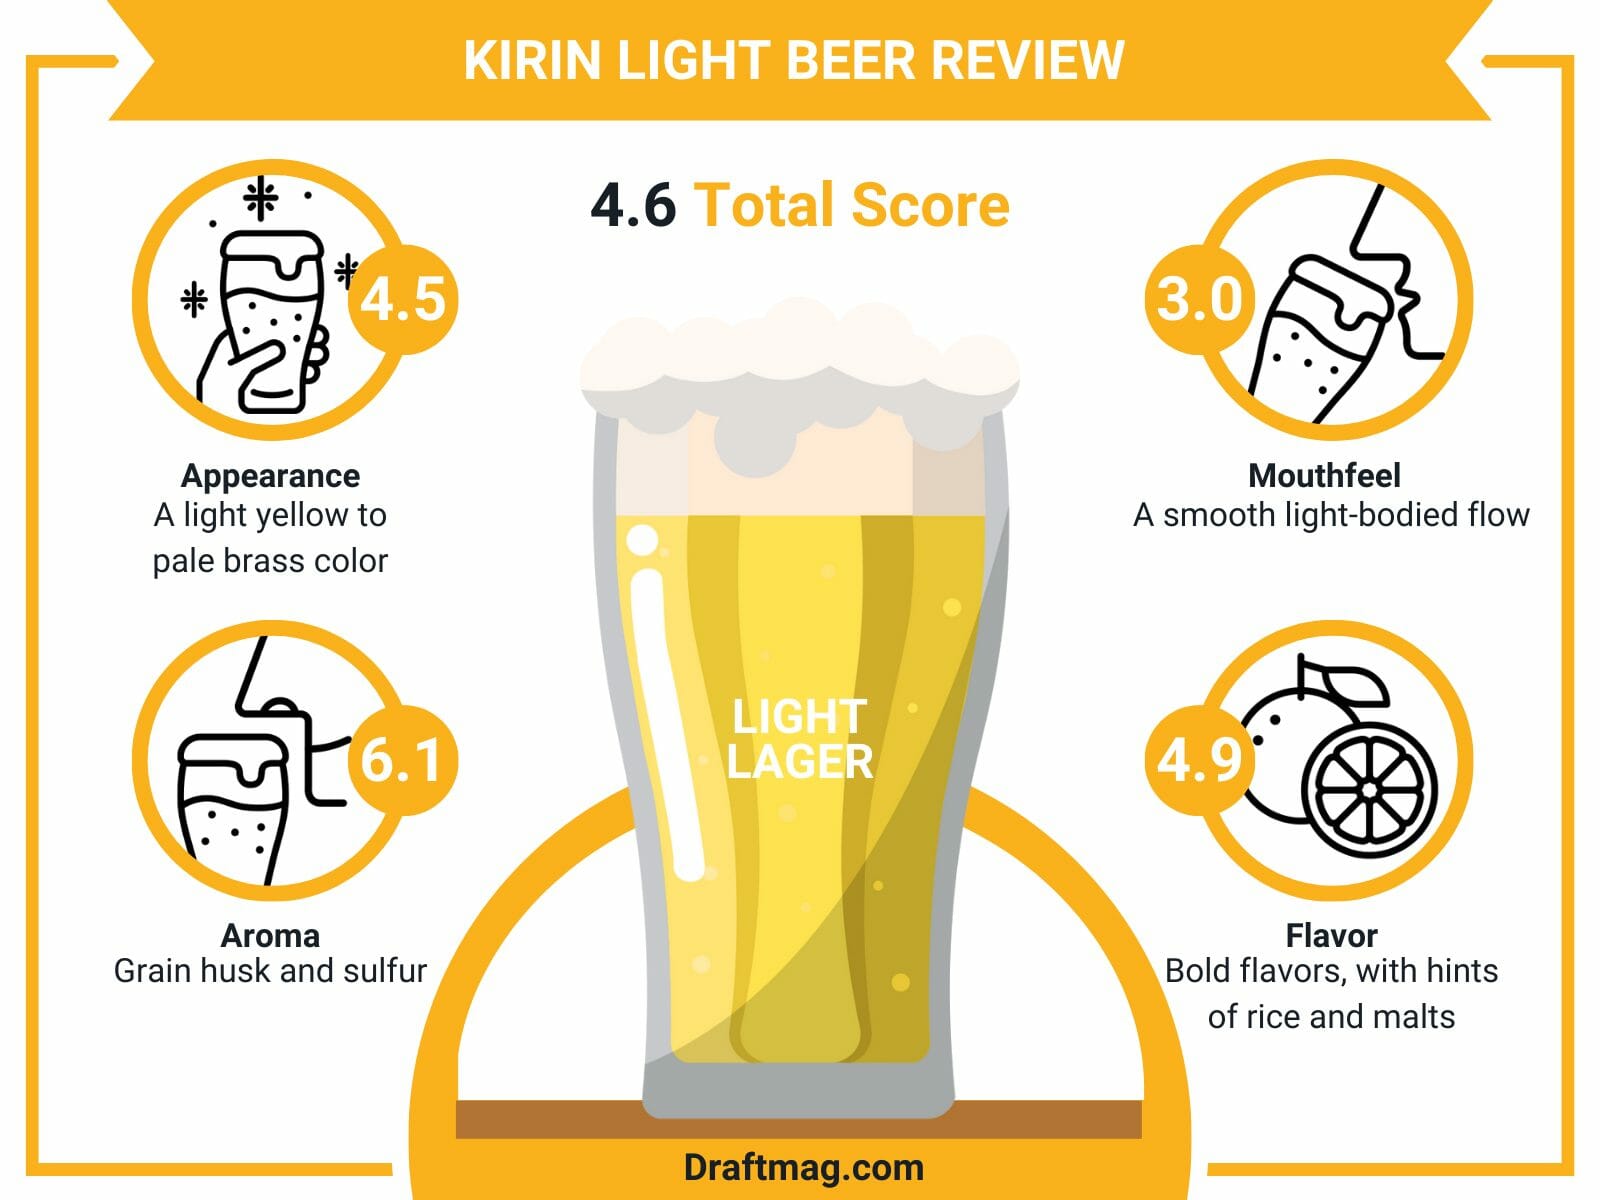 Kirin light beer review infographic